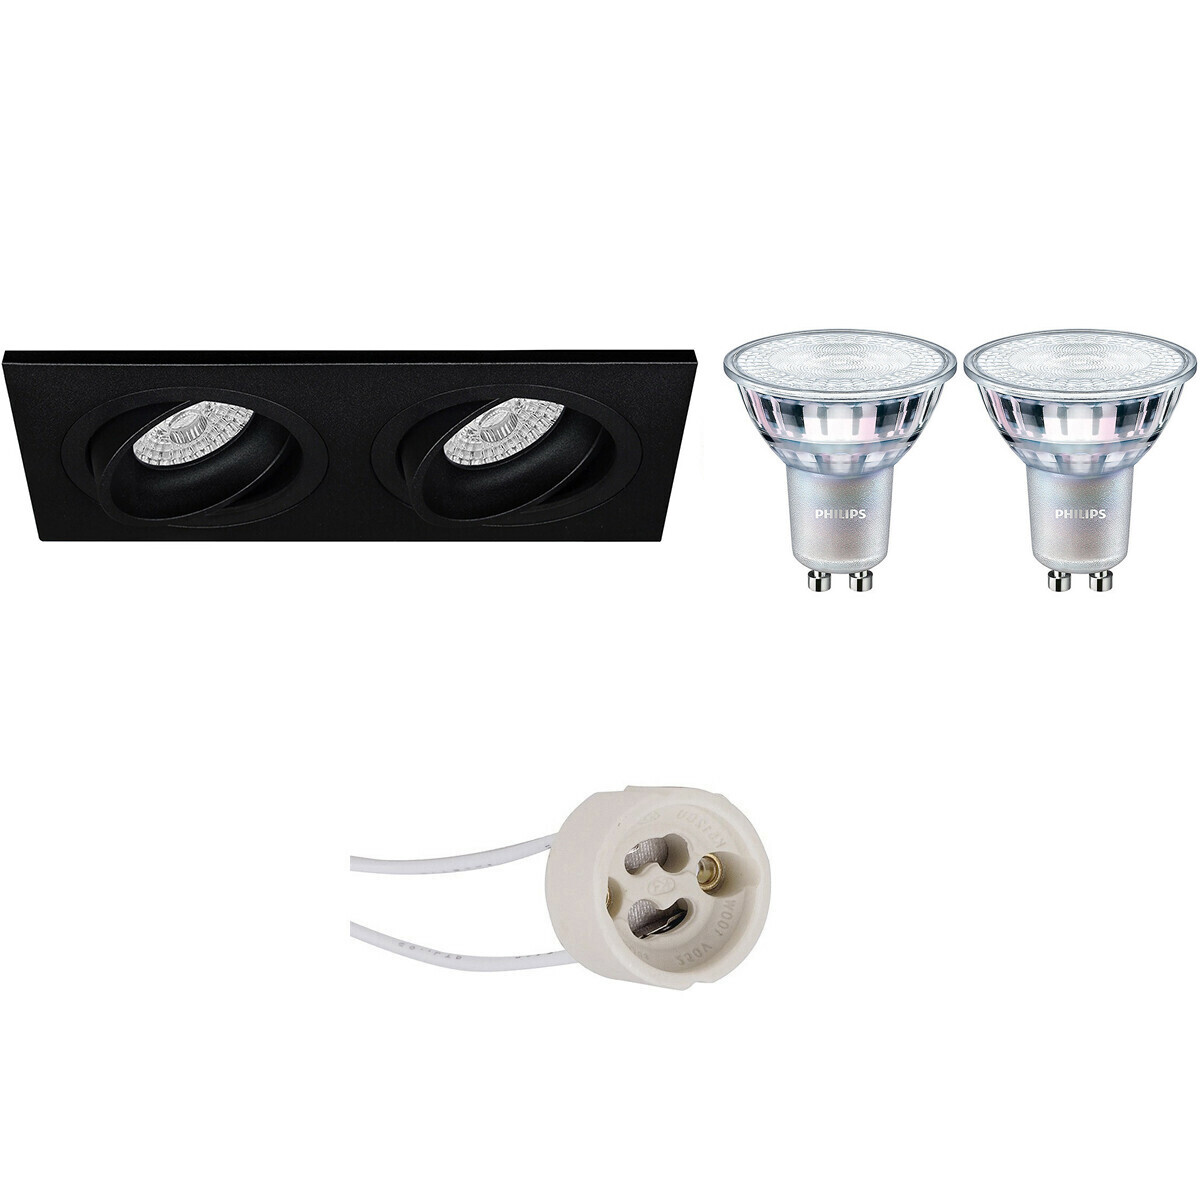 BES LED LED Spot Set - Pragmi Borny Pro - GU10 Fitting - Inbouw Rechthoek Dubbel - Mat Zwart - Kantelbaar - 175x92mm - Philips - MASTER 927 36D VLE - 4.9W - Warm Wit 2200K-2700K - DimTone Dimbaar